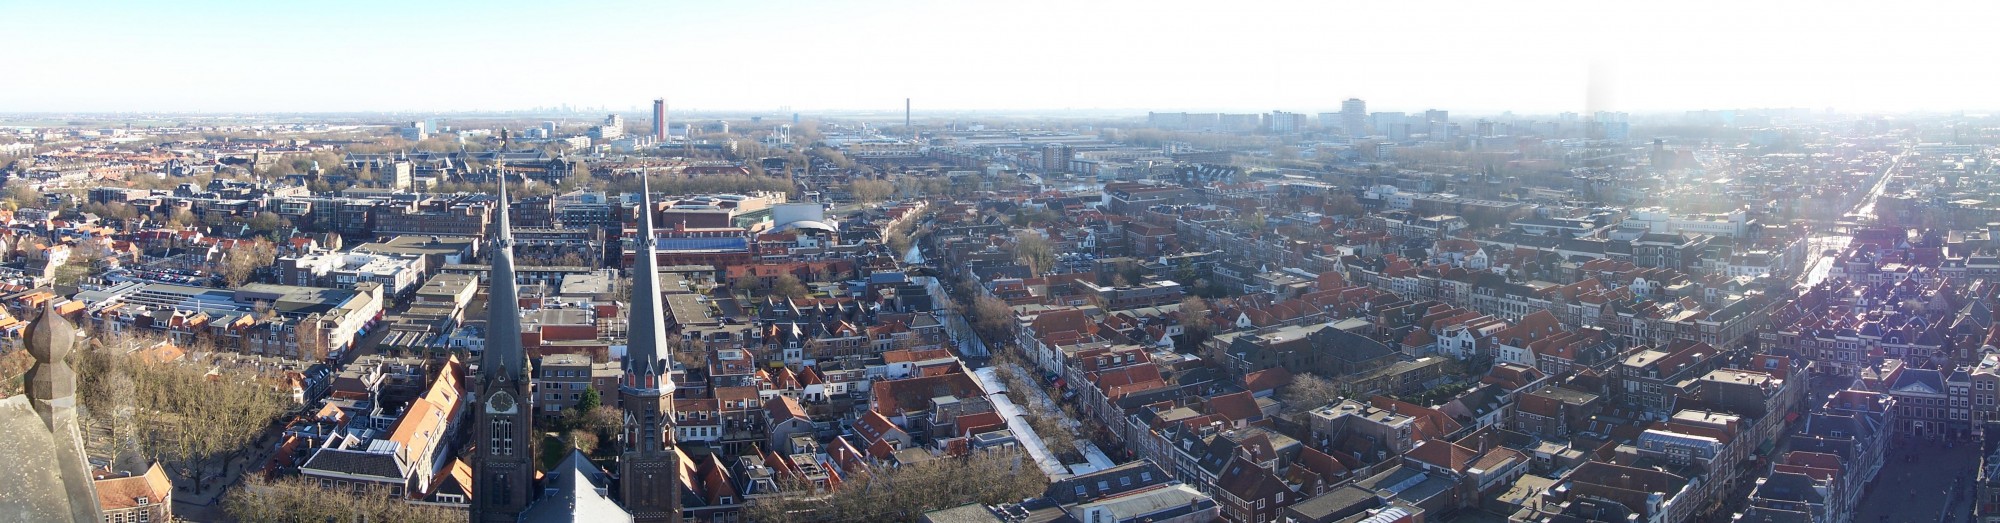 Panorama of Delft - panoramio